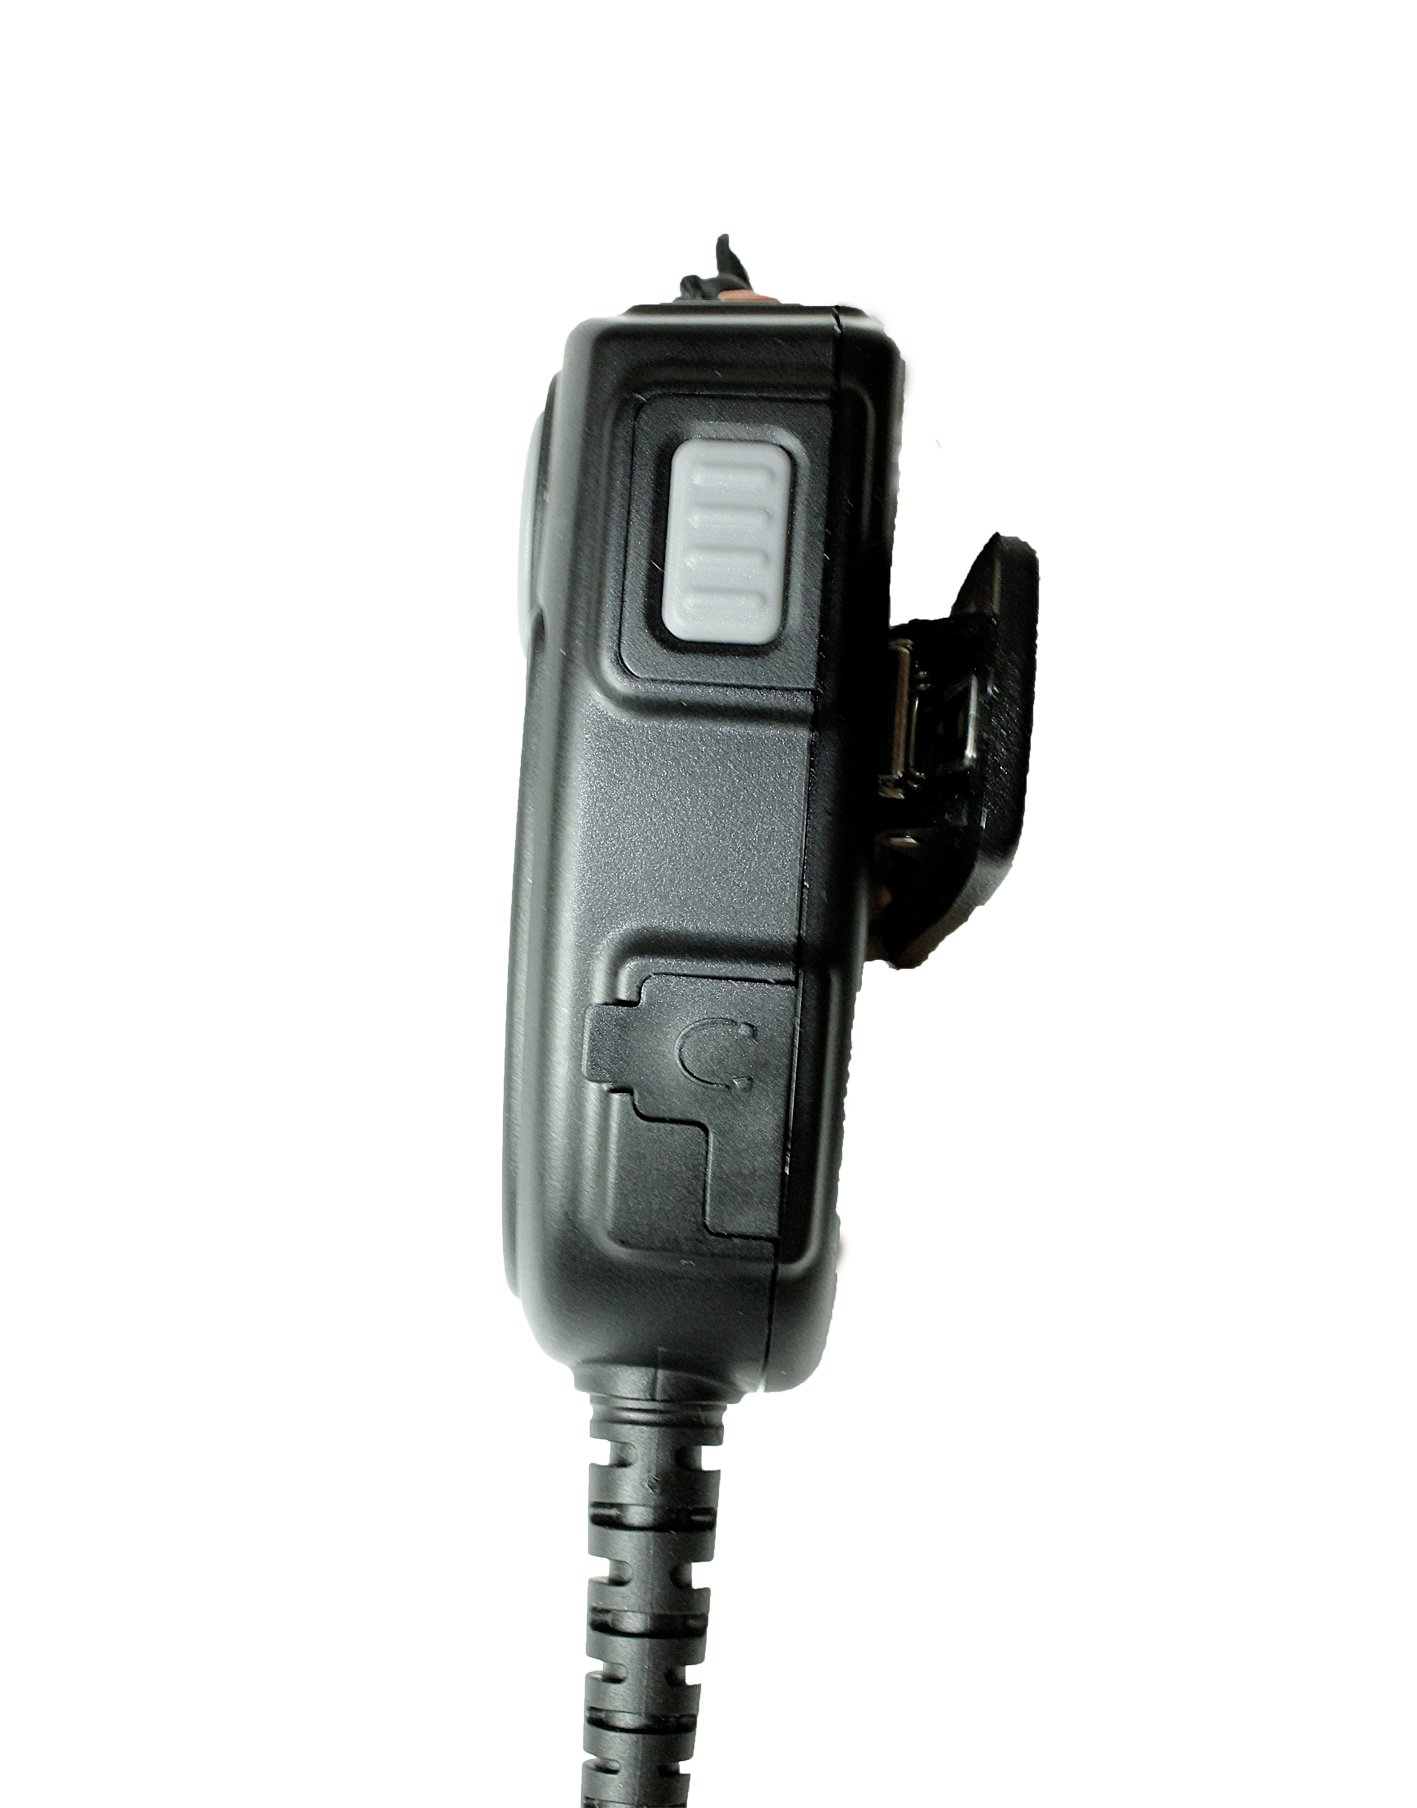 TITAN remote speaker microphone MM20 with Nexus socket 01 suitable for Sepura STP9000, SC20